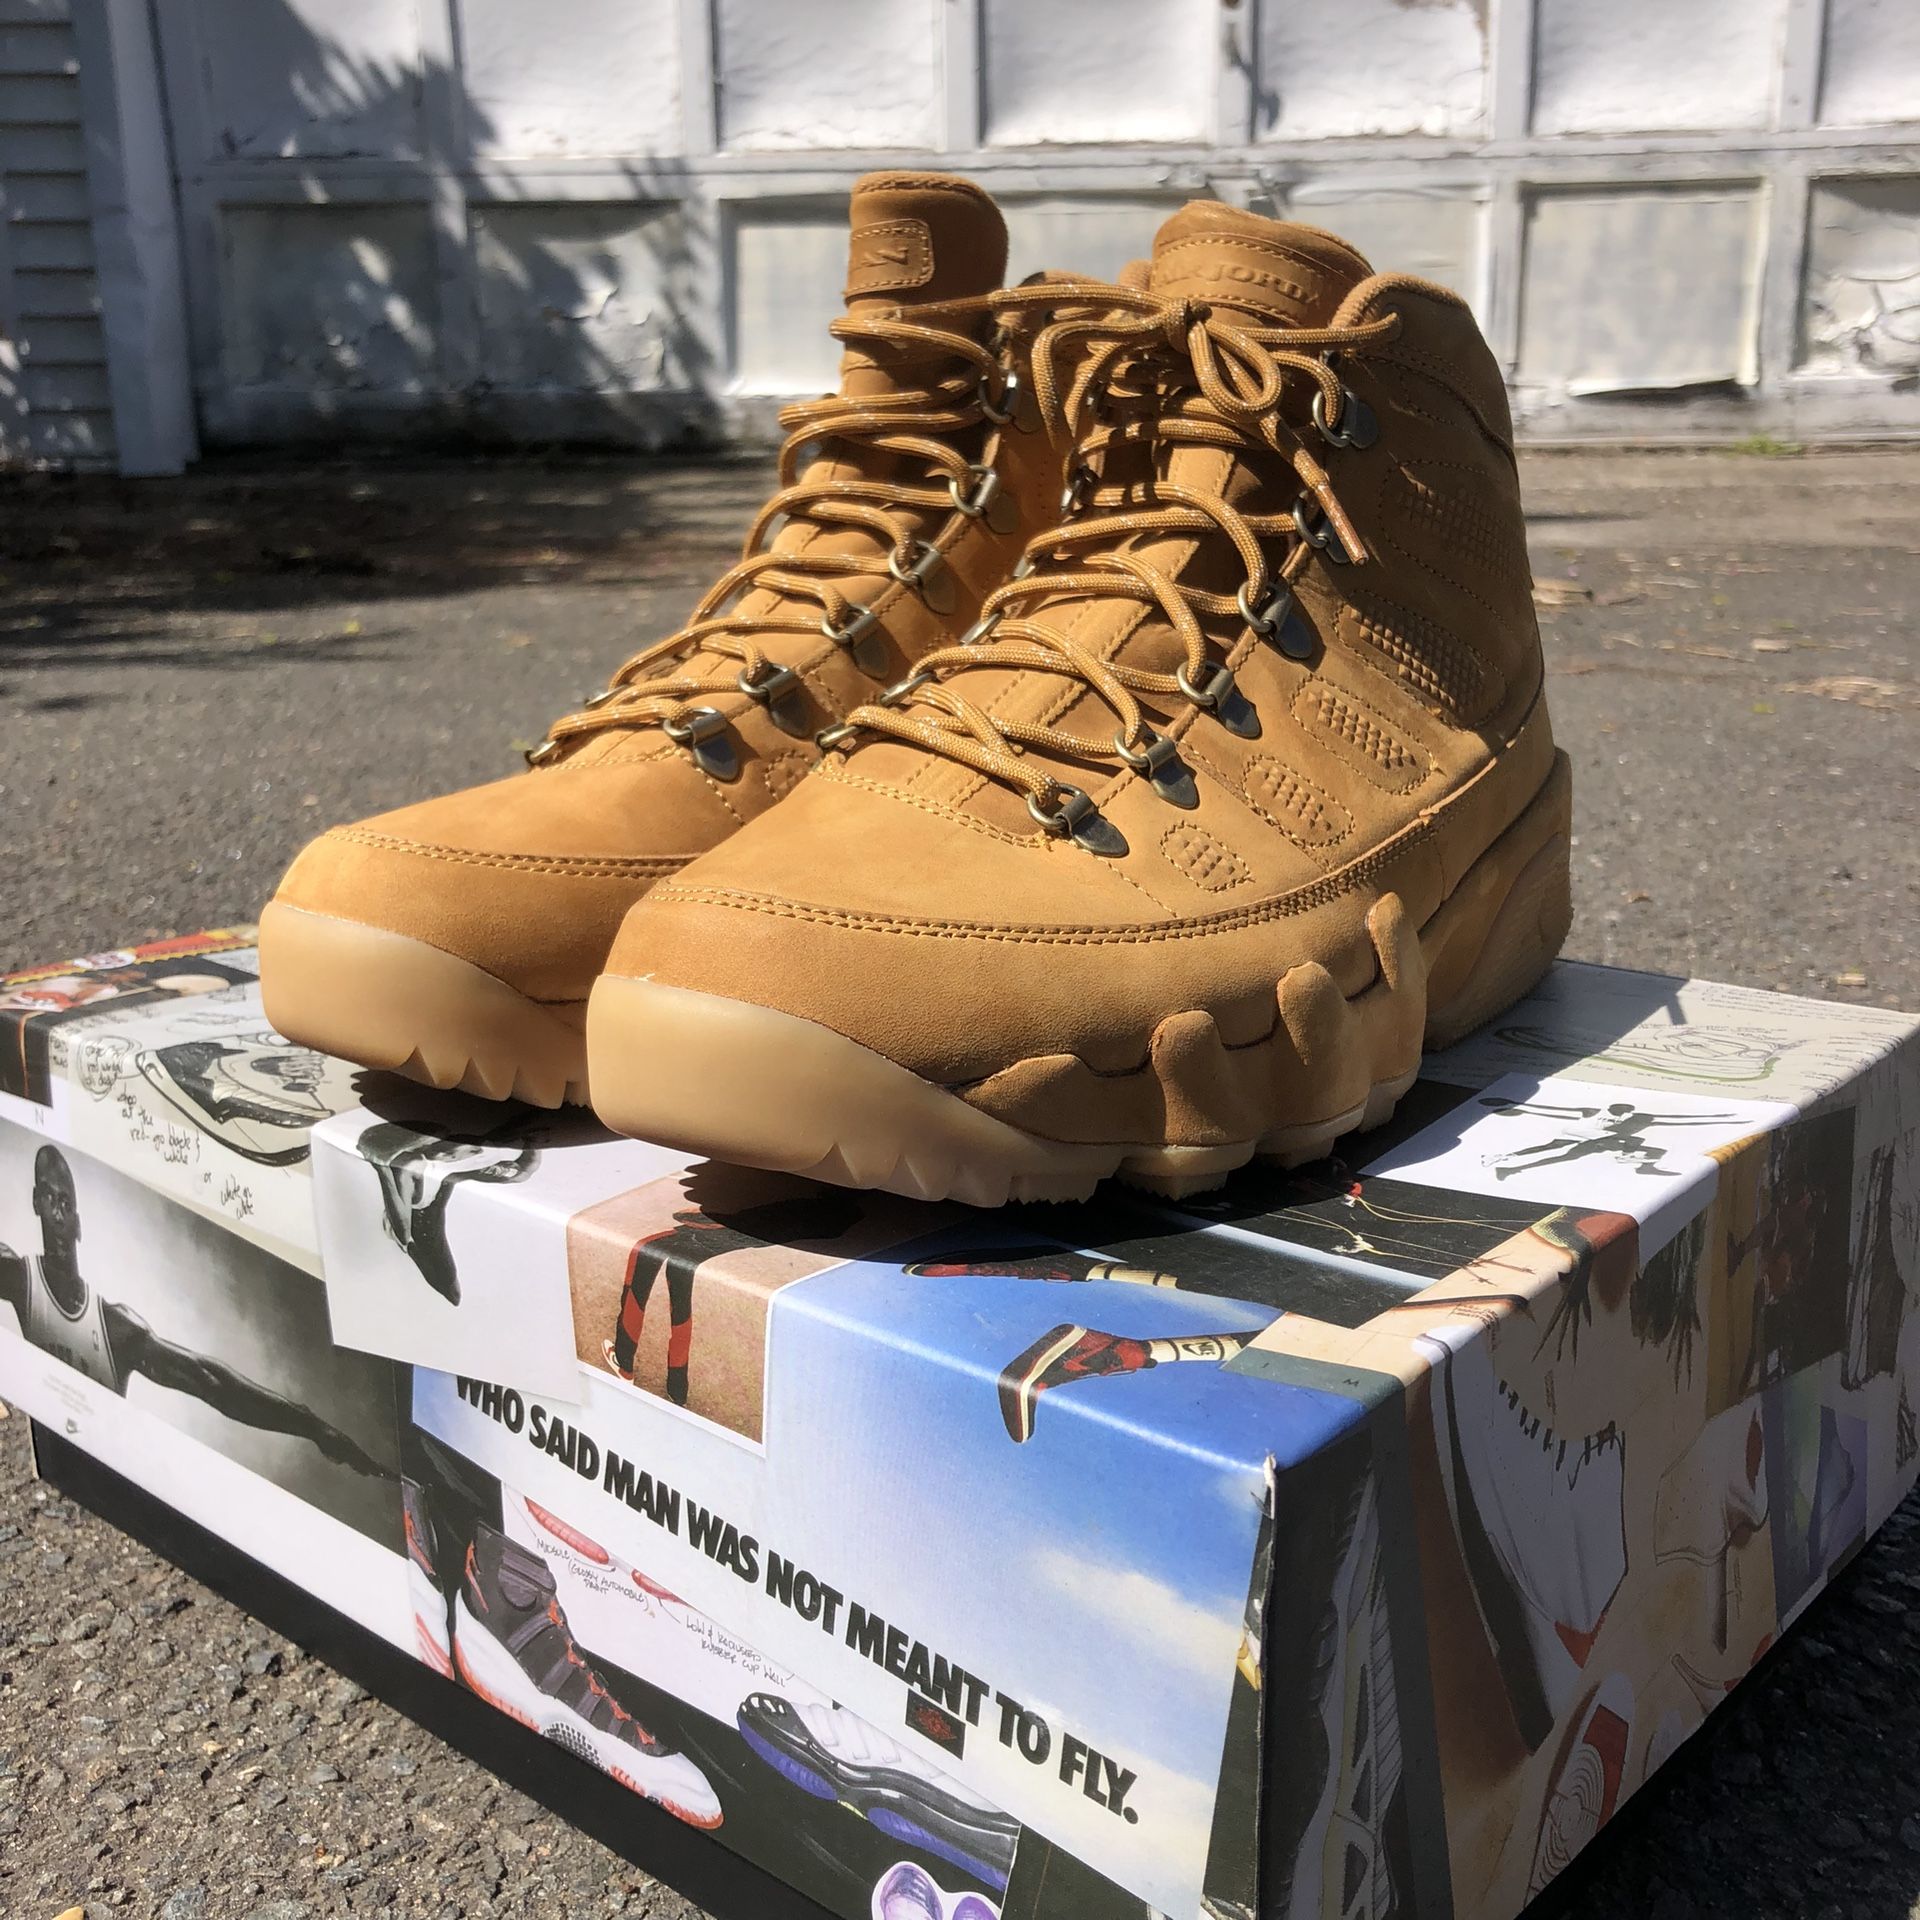 Retro Jordan “boot” 9s